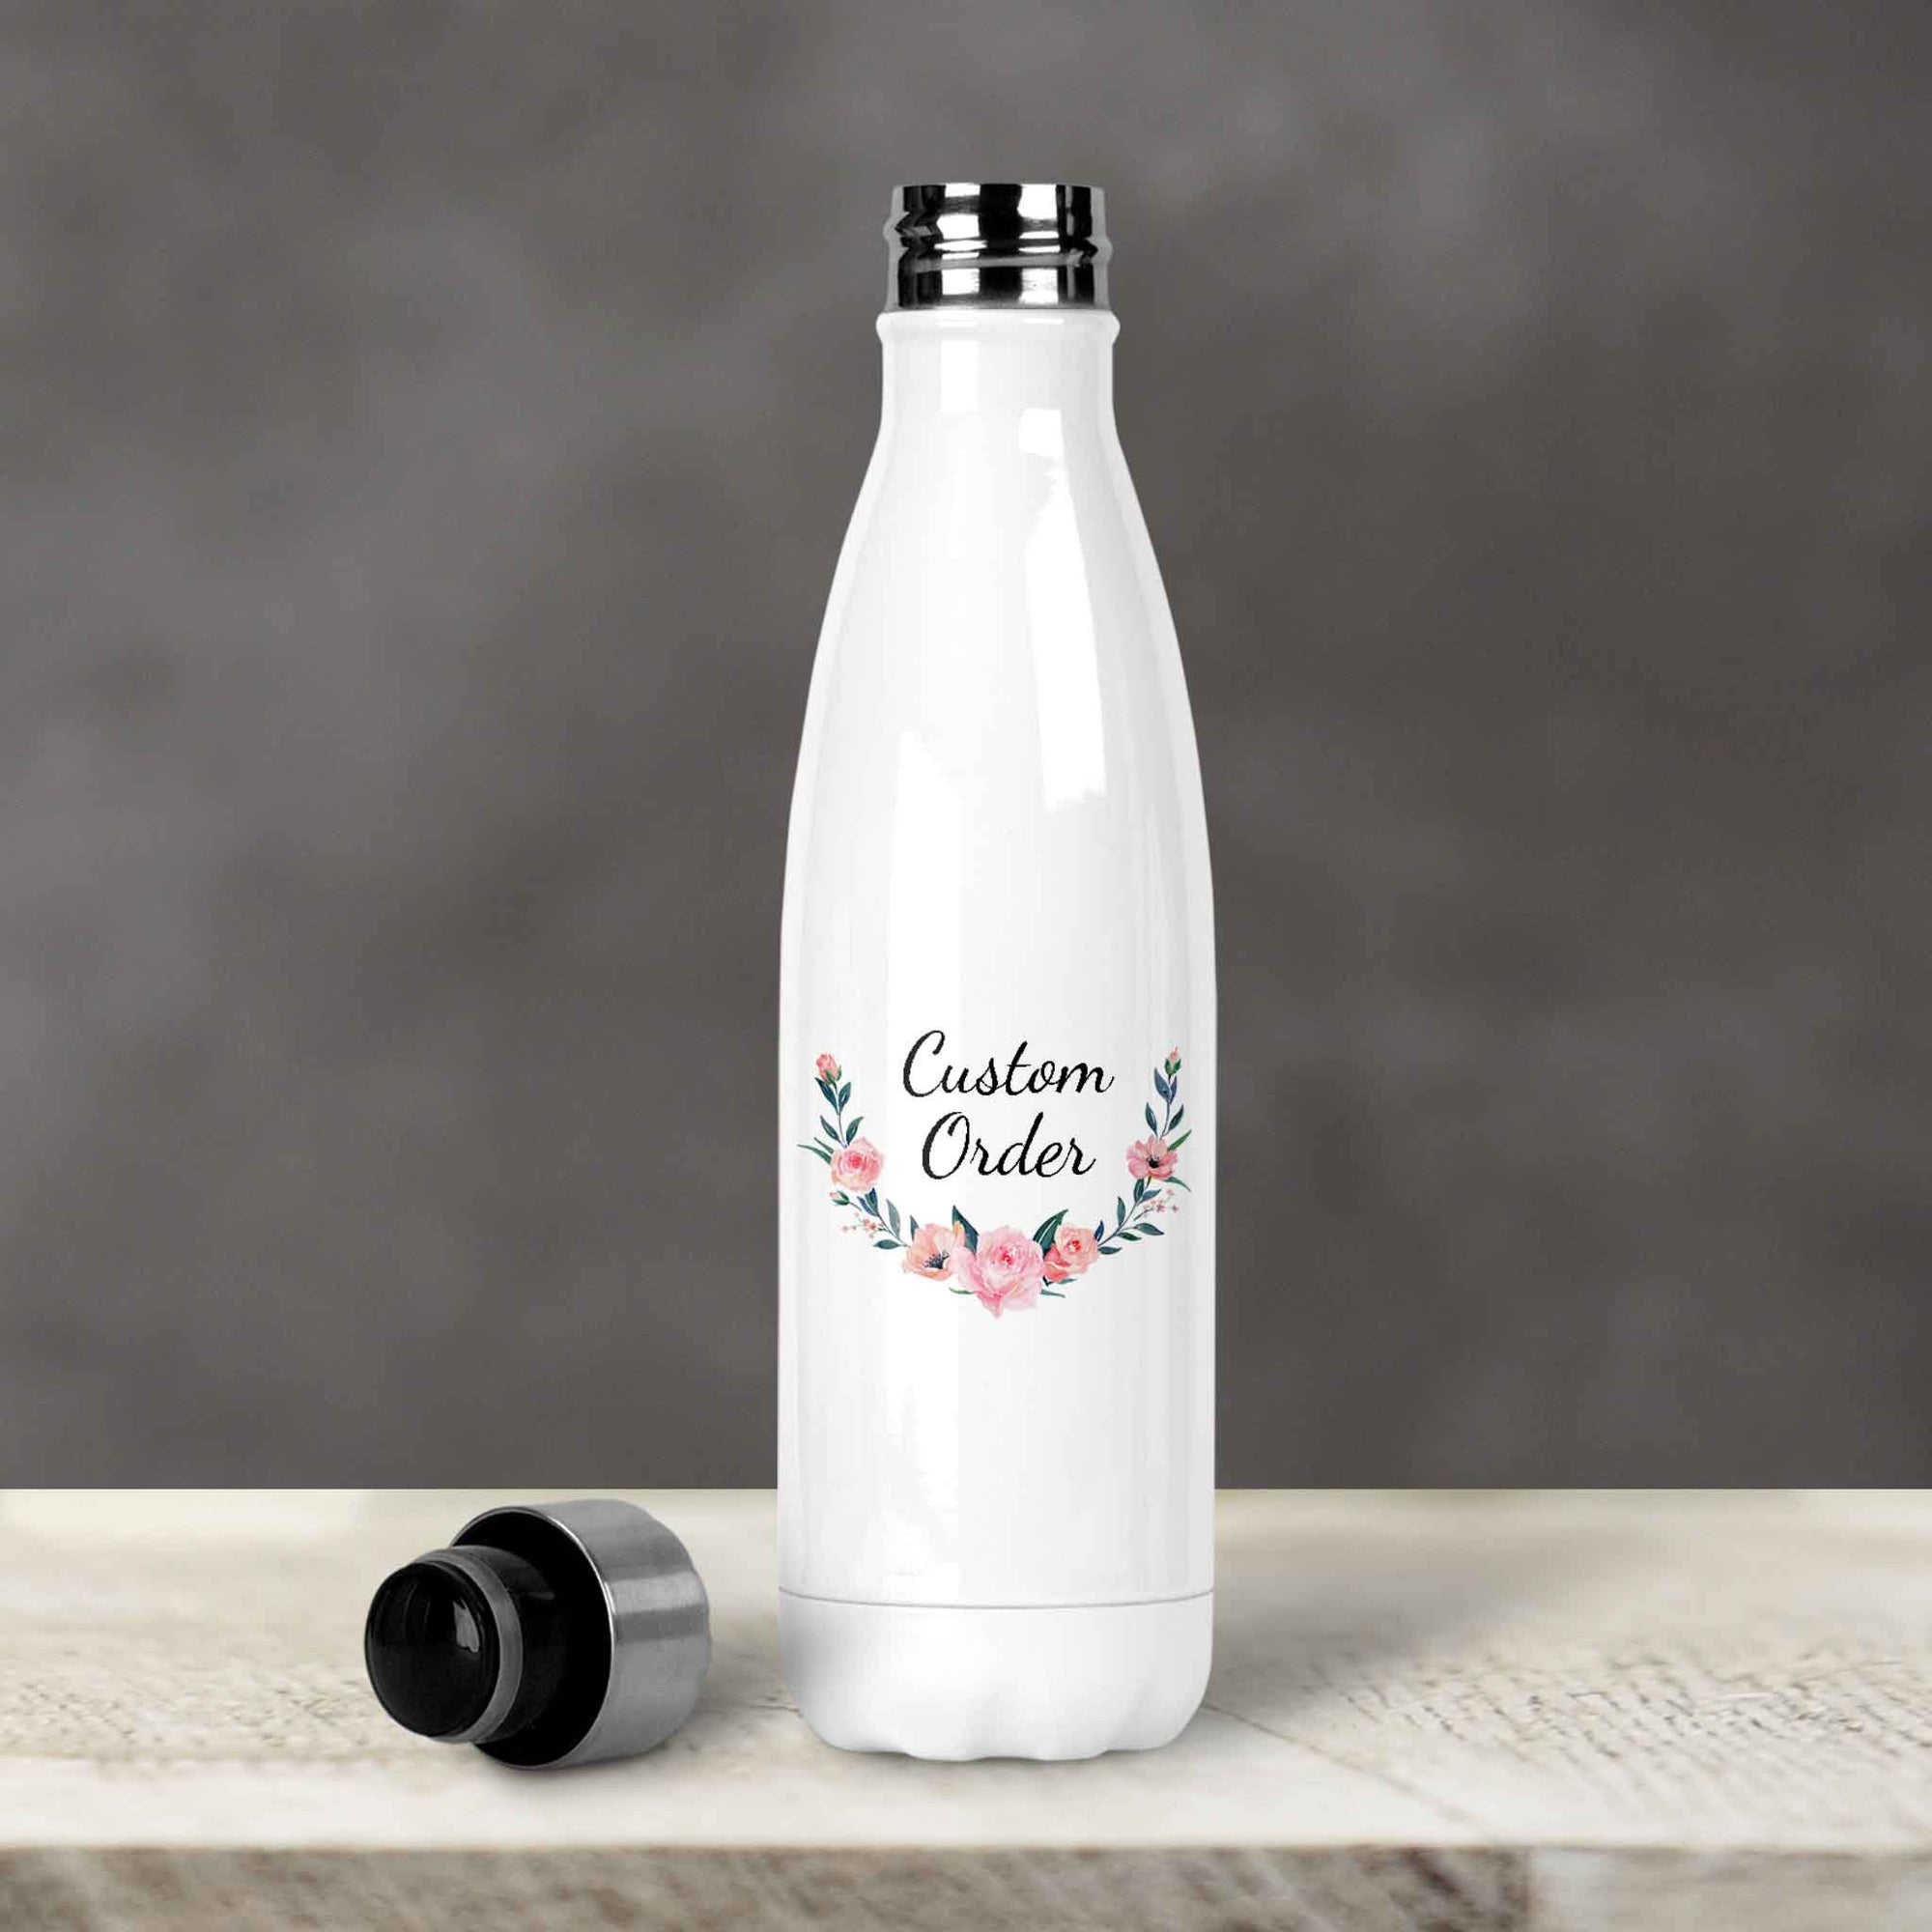 Personalized Water Bottles | Custom Stainless Steel Water Bottles | 17 oz Soda | Custom Order